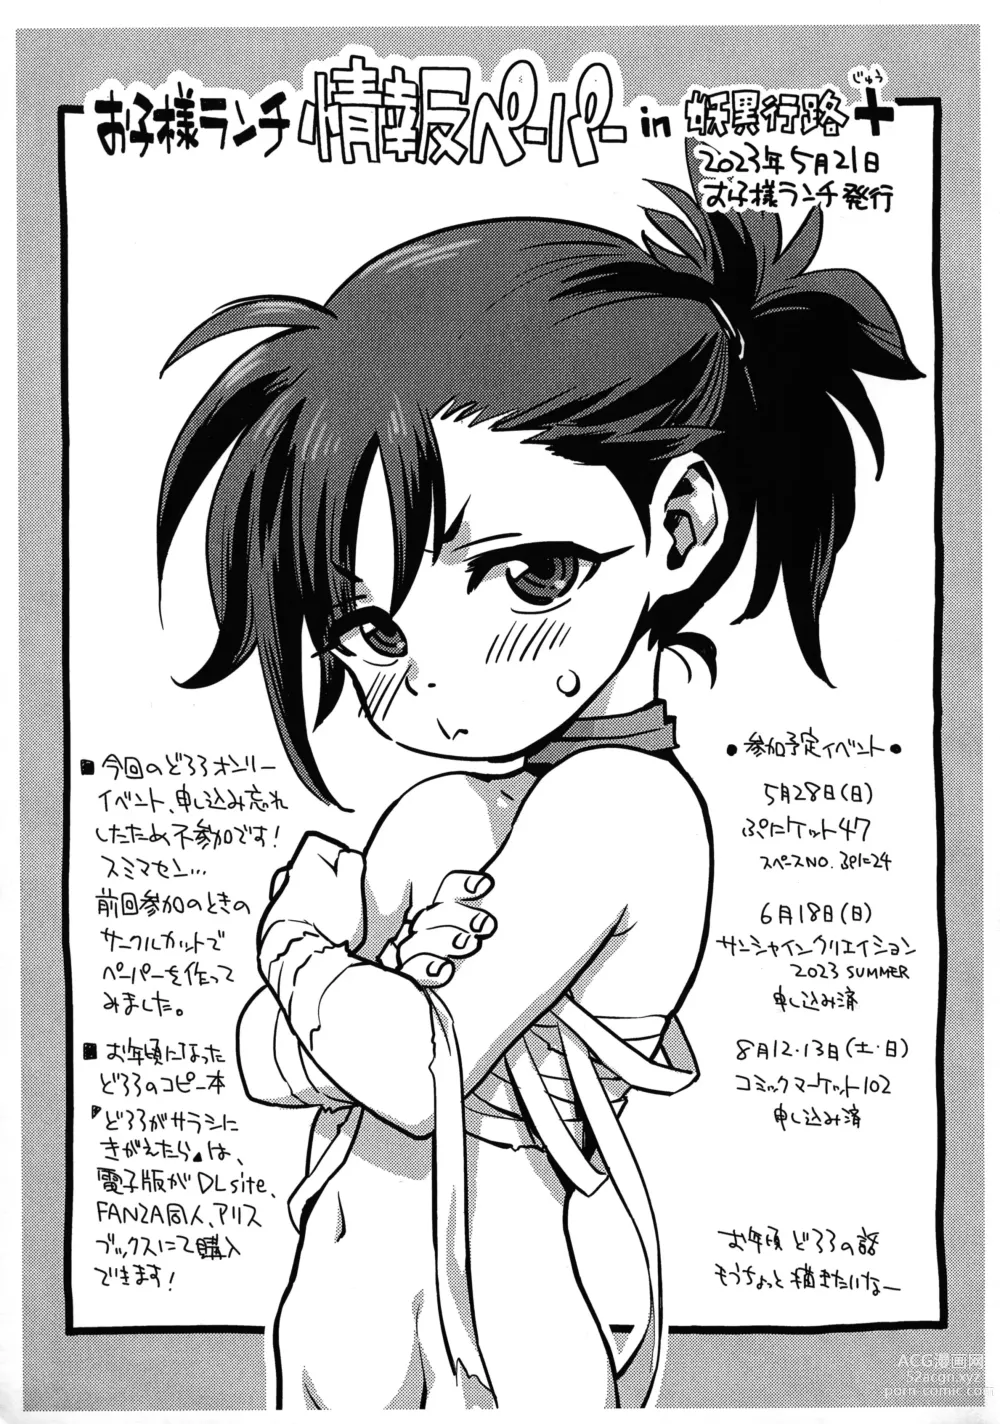 Page 9 of doujinshi ZOIDS-bon (Kari) Junbi-gou